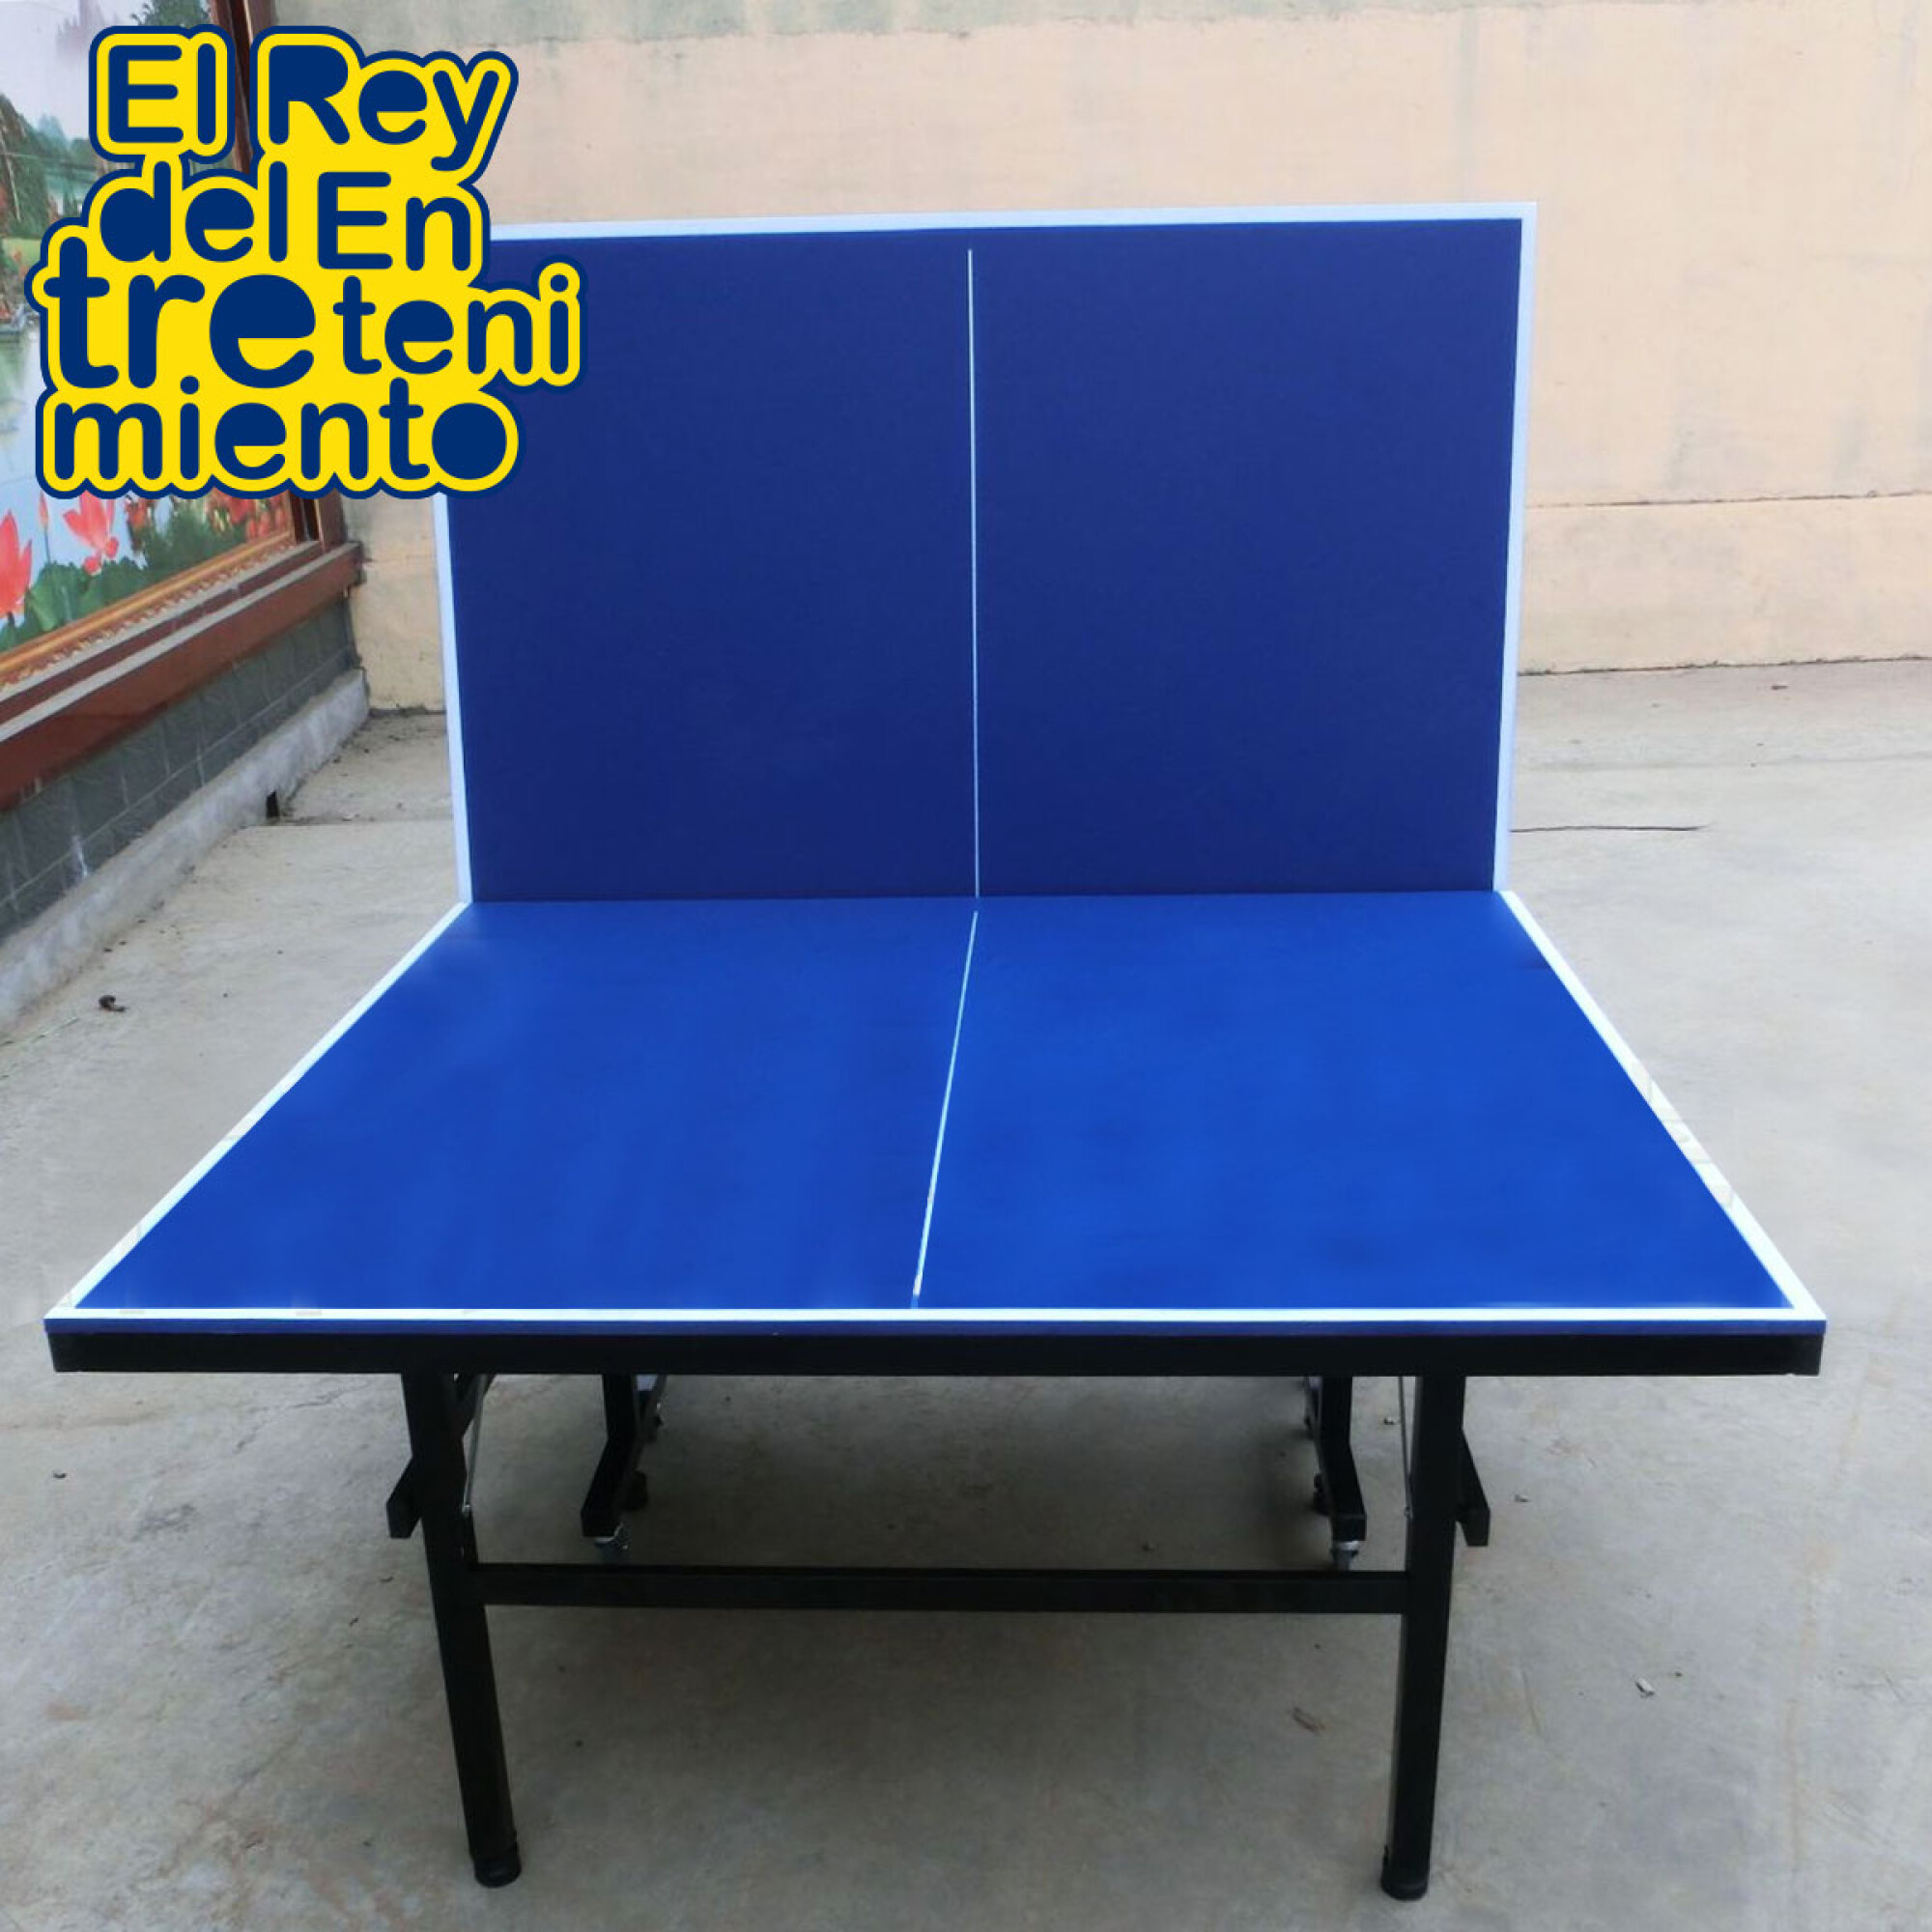 Mesa de ping pong portátil, mesa de tenis plegable de tamaño mediano con  red para interiores y exteriores, azul, 60 x 26 x 27.5 pulgadas